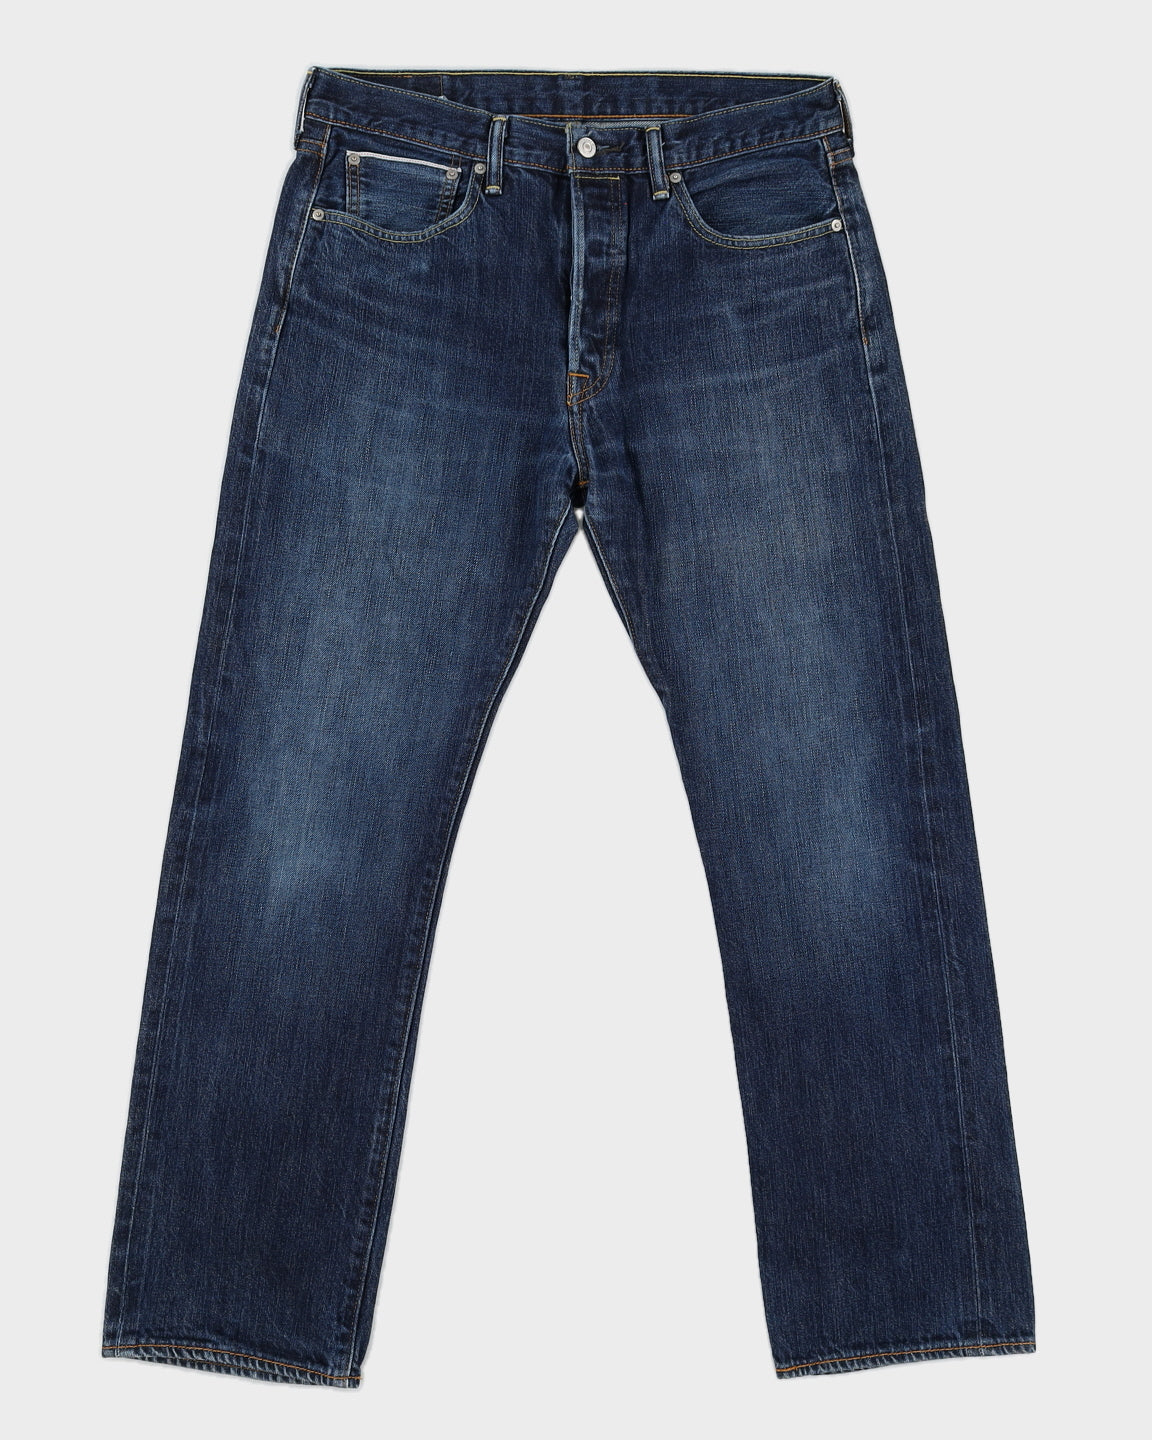 Levi's 501 Blue Medium Washed Selvedge Jeans - W34 L31